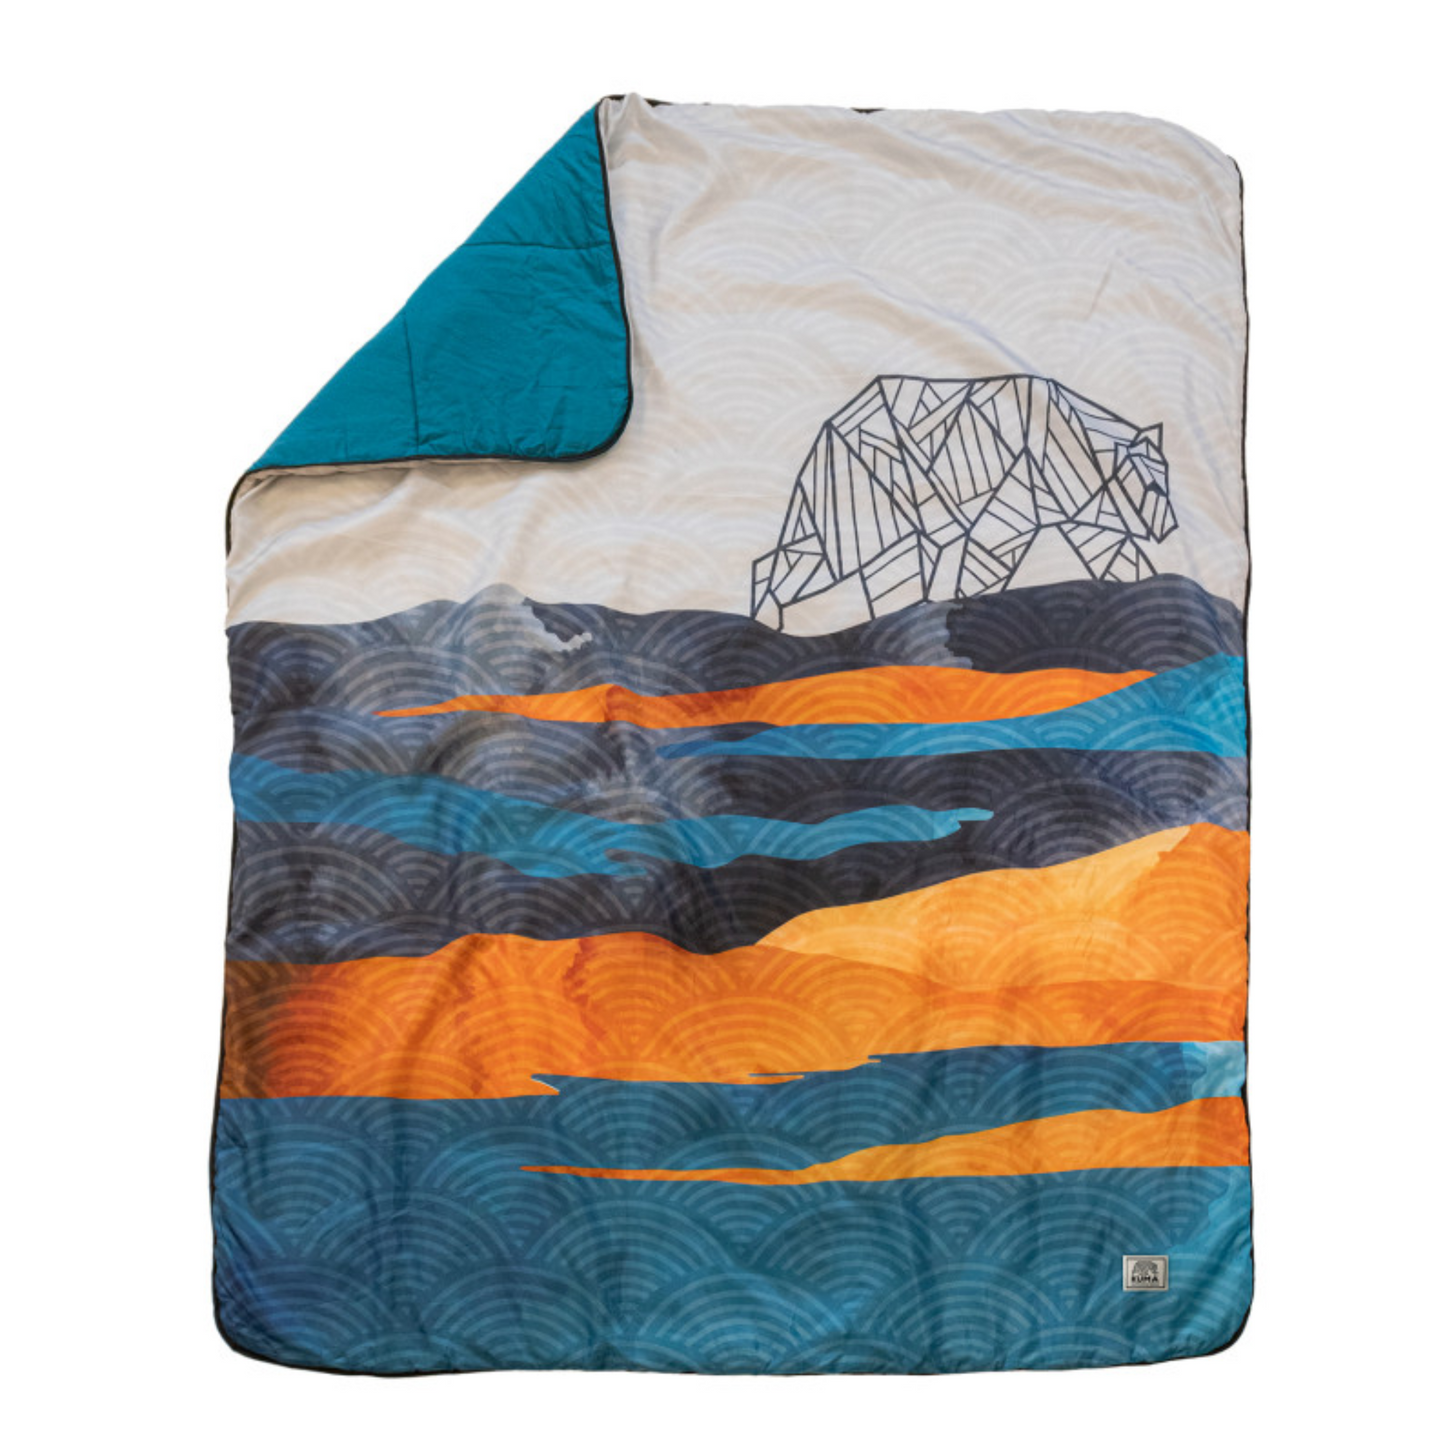 Kuma Kamp Blanket